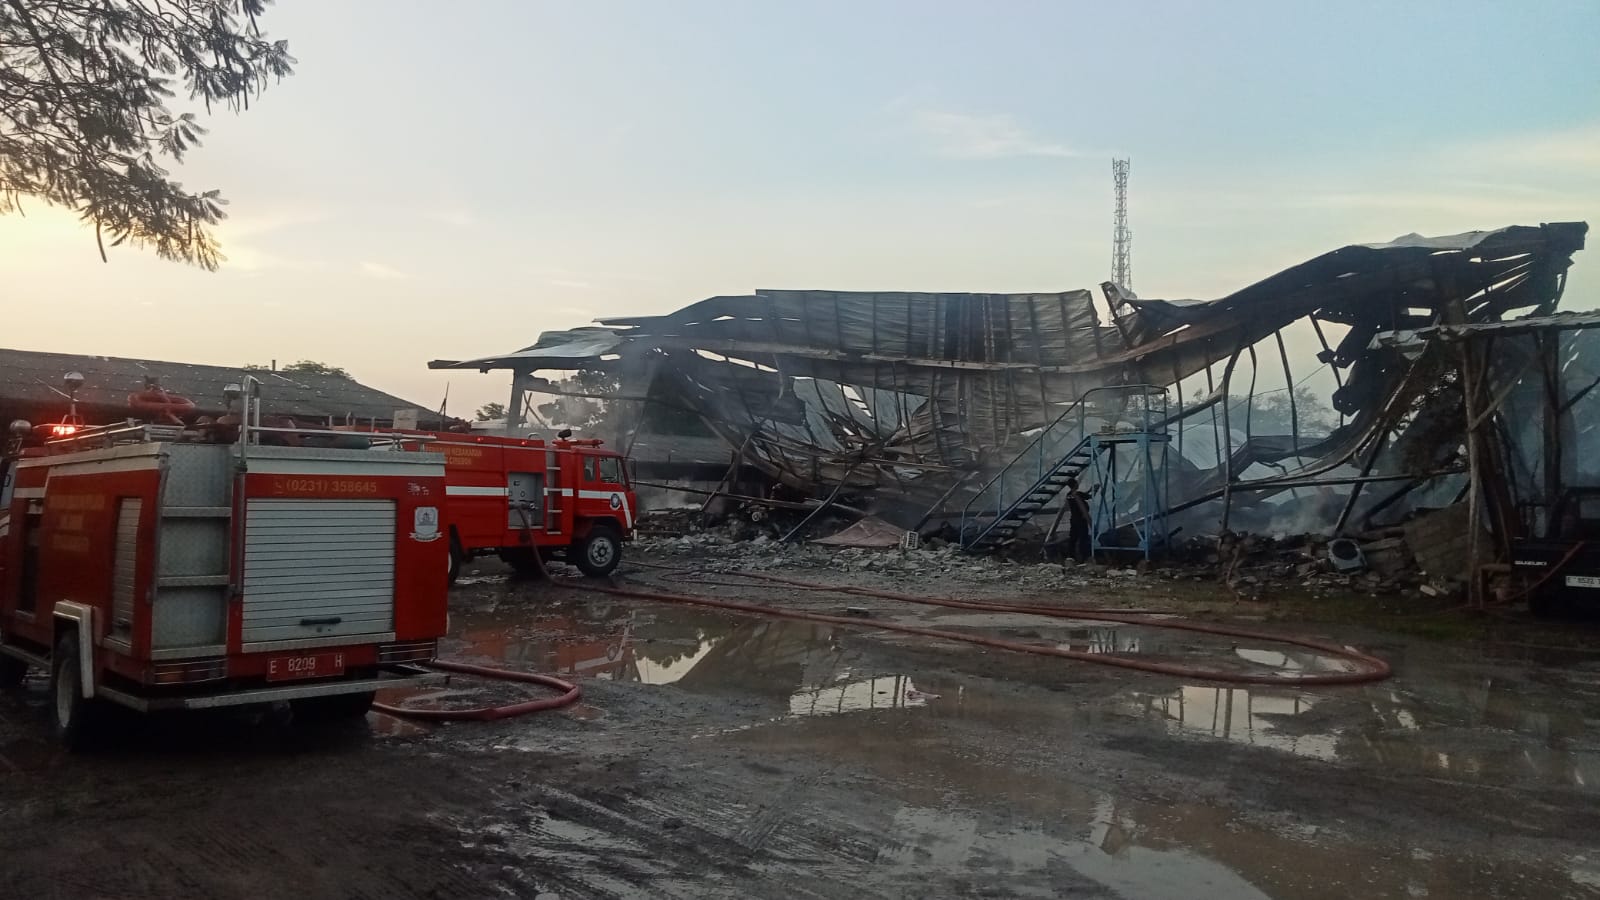 Kebakaran Pabrik Rotan,10 Kontainer Furniture Siap Ekspor Hangus Terbakar Ditafsir Kerugian Miliaran 